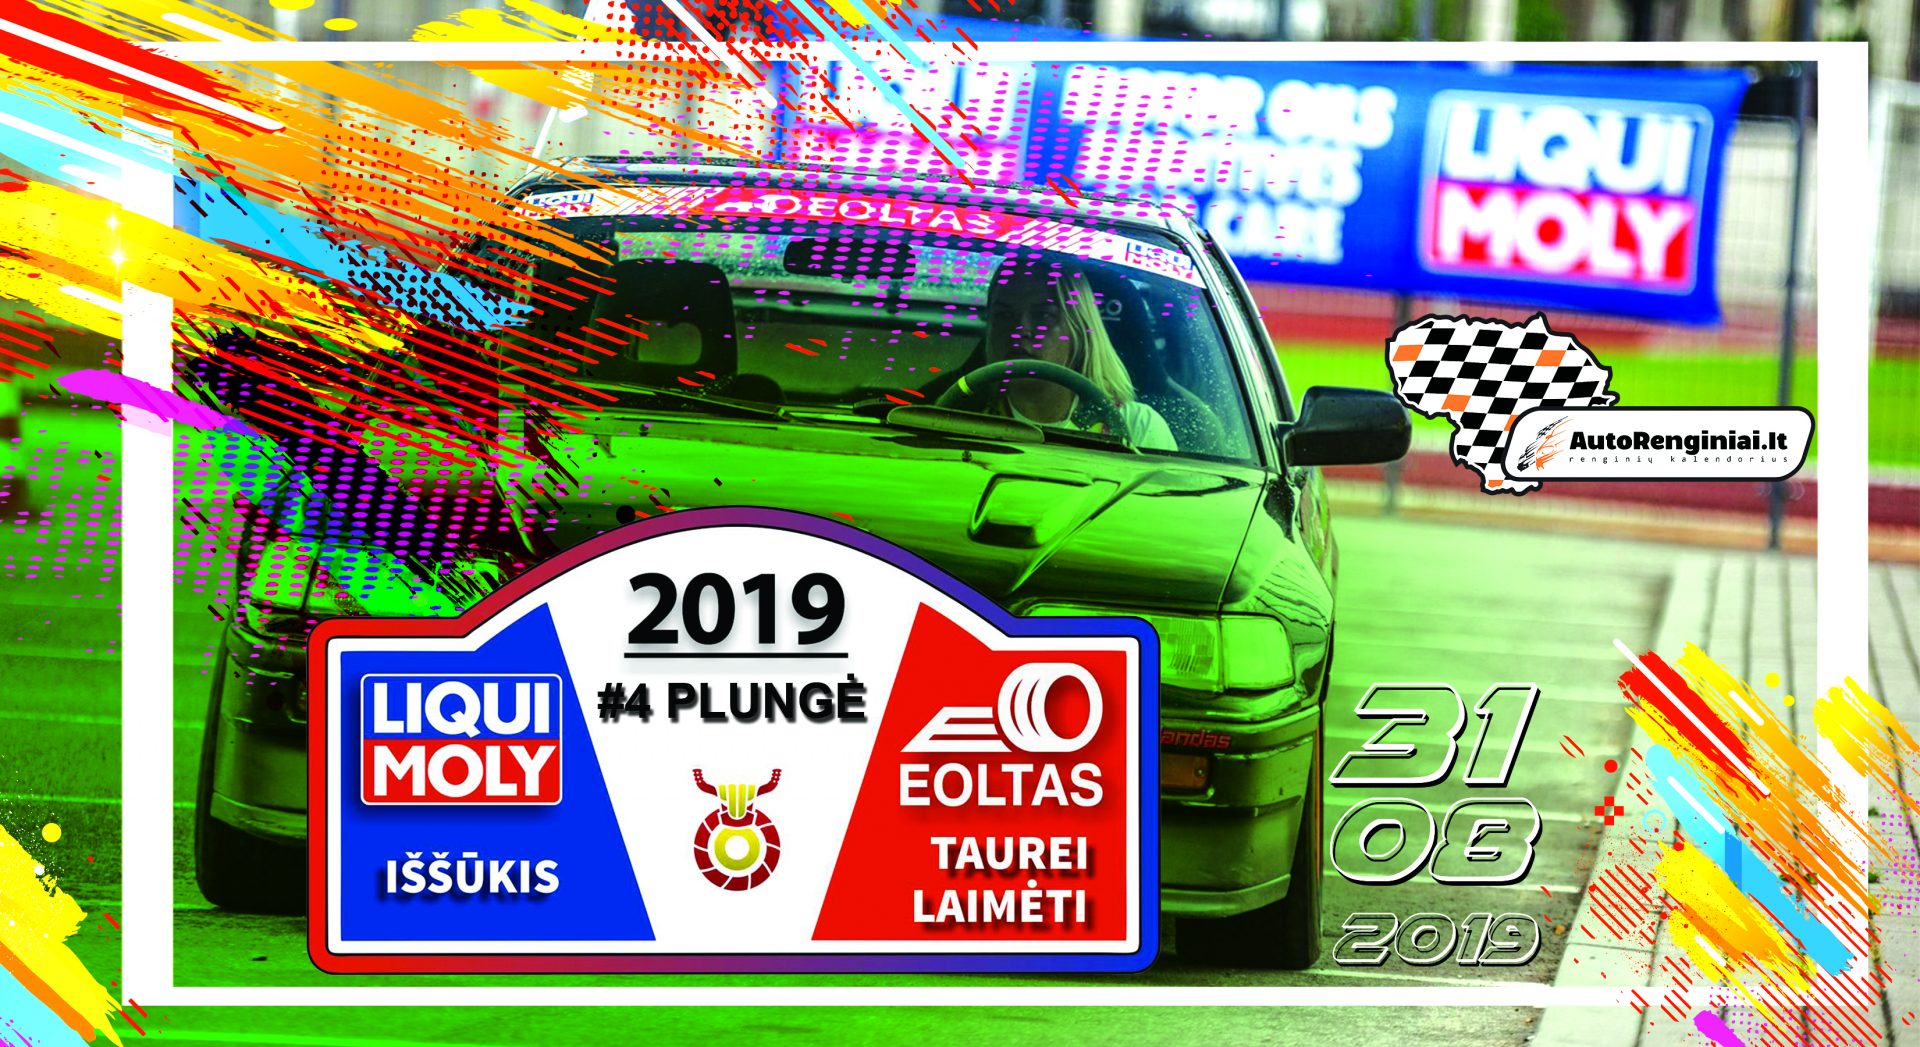 Liqui Moly iššūkis Eolto taurei laimėti 2019 - 4 etapas Plungė